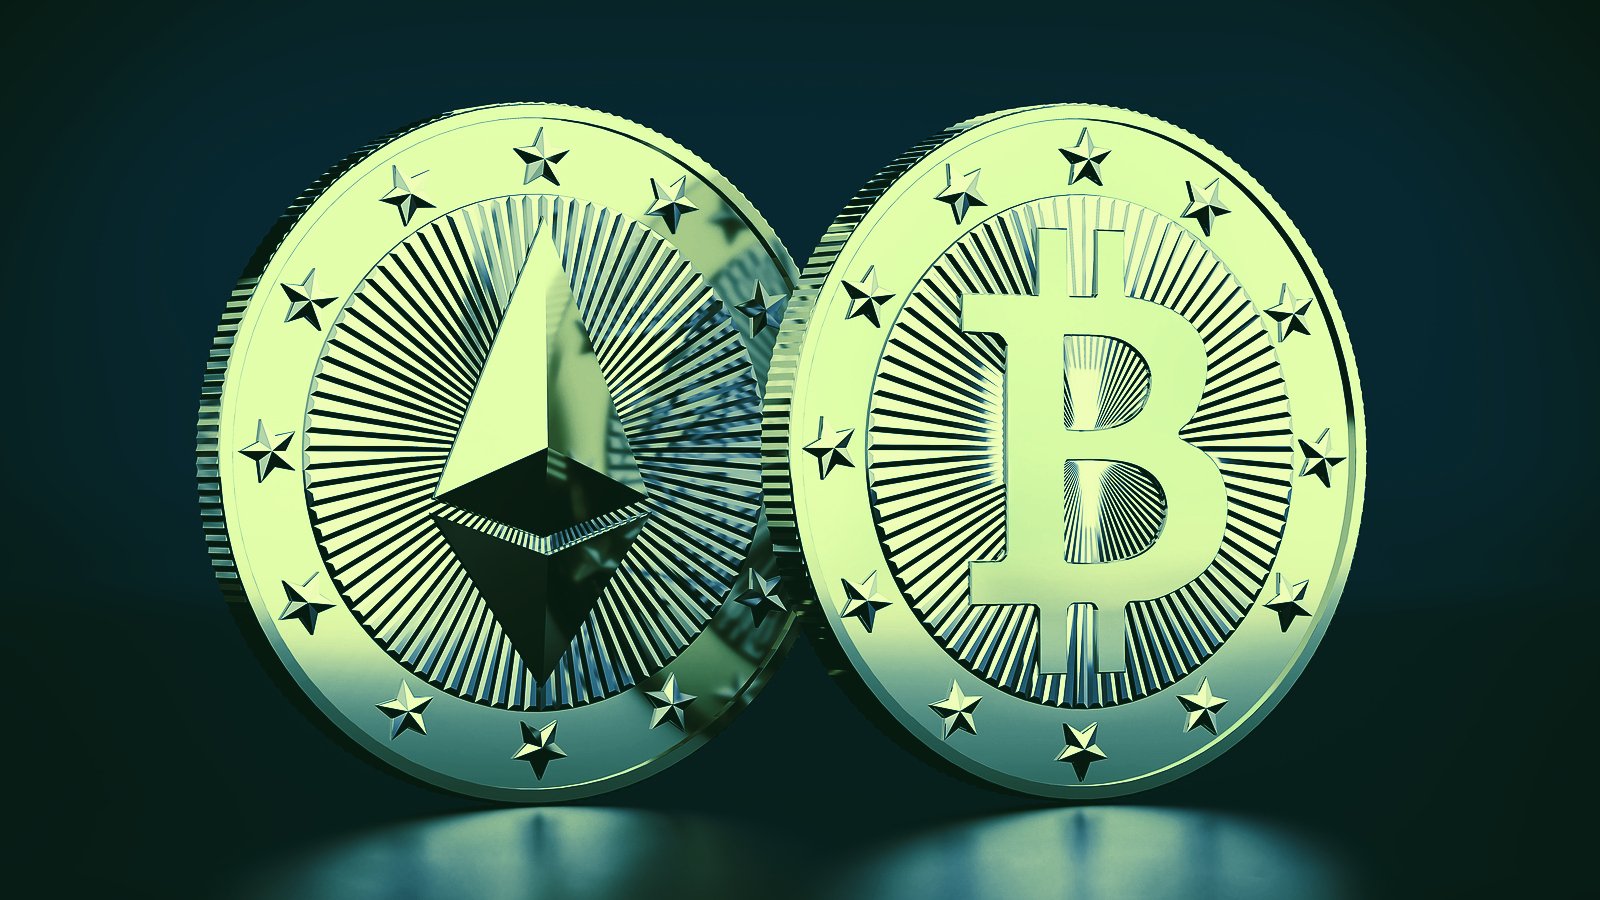 Bitcoin Hits $20K, Ethereum Rises 12% as Crypto Market Cap Tops $1 Trillion